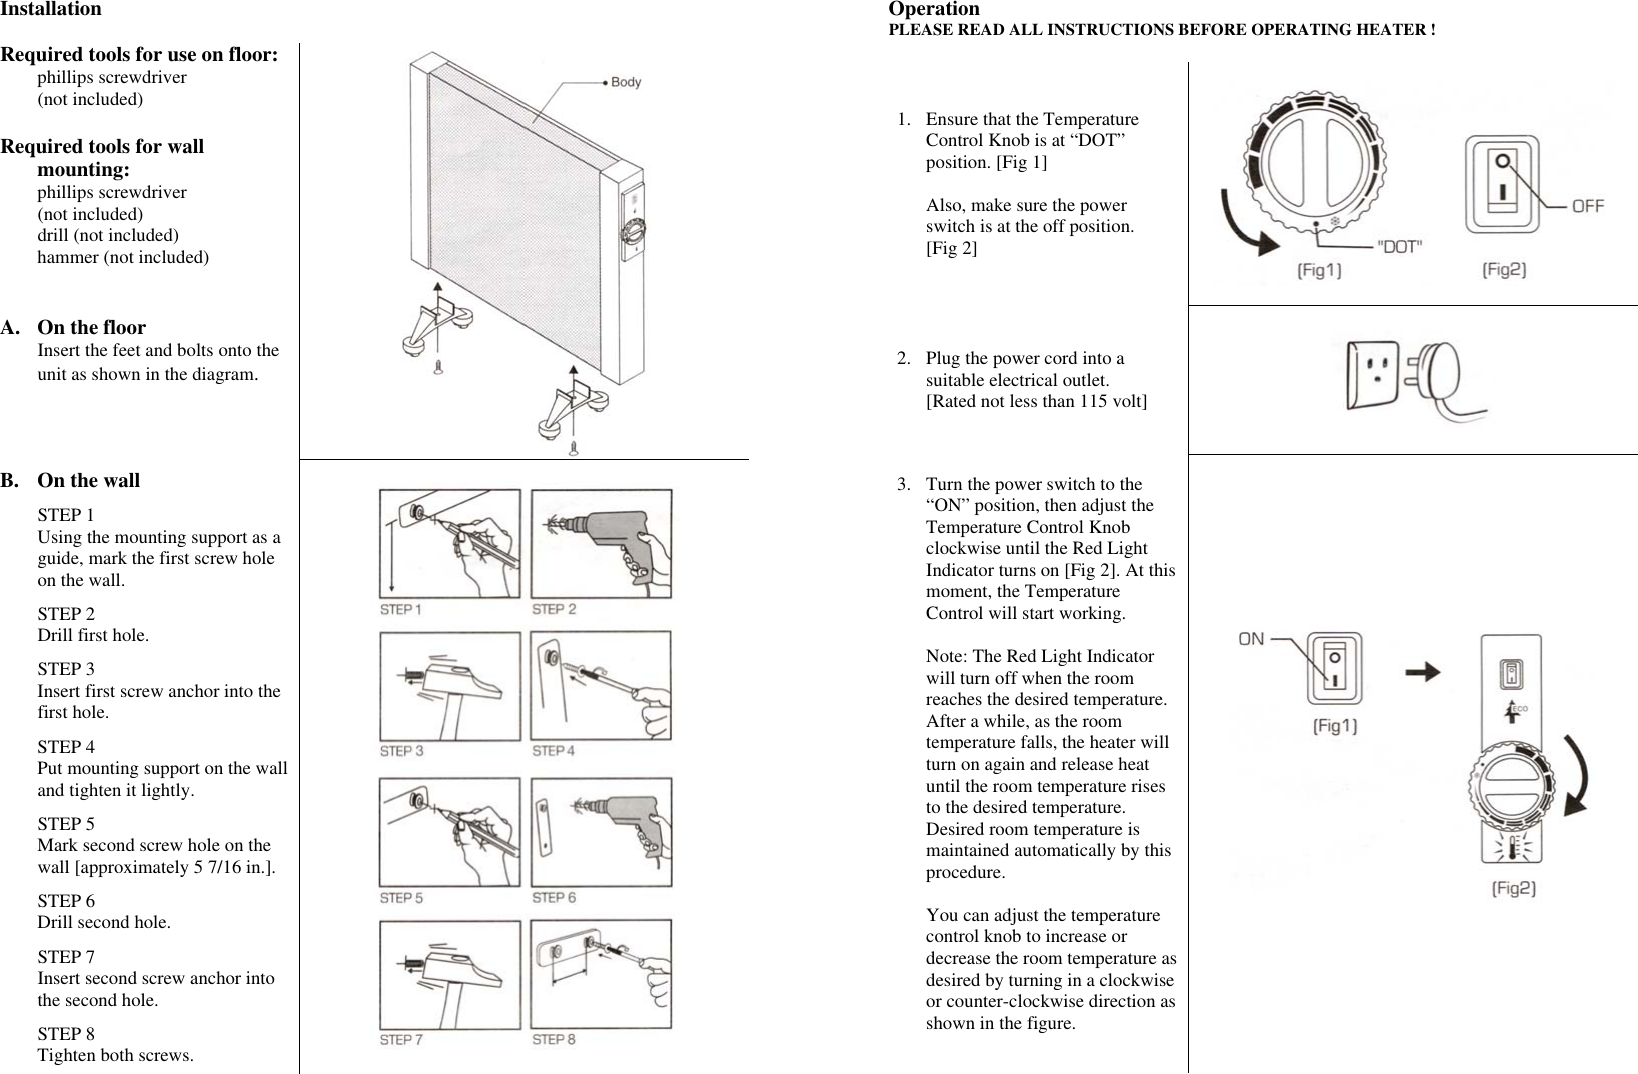 Page 3 of 5 - Soleus-Air Soleus-Air-Soleus-Air-Electric-Heater-Hgw-308-Users-Manual- MICATHERMIC PANEL HEATER  Soleus-air-soleus-air-electric-heater-hgw-308-users-manual